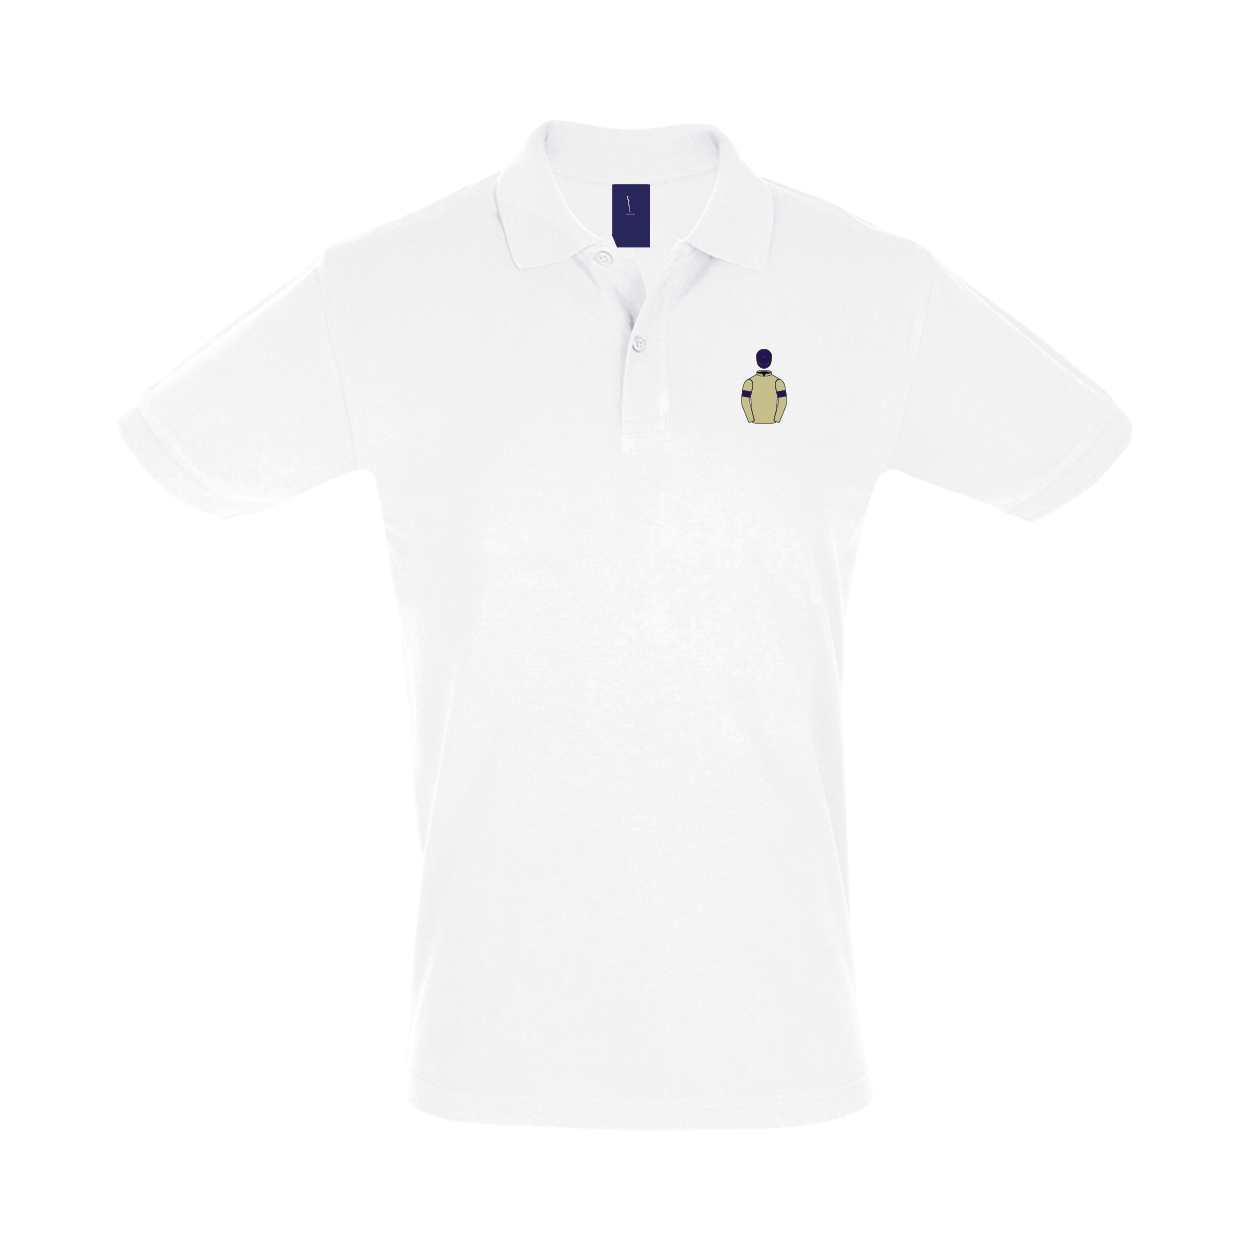 Ladies Hambleton Racing Embroidered Polo Shirt - Clothing - Hacked Up